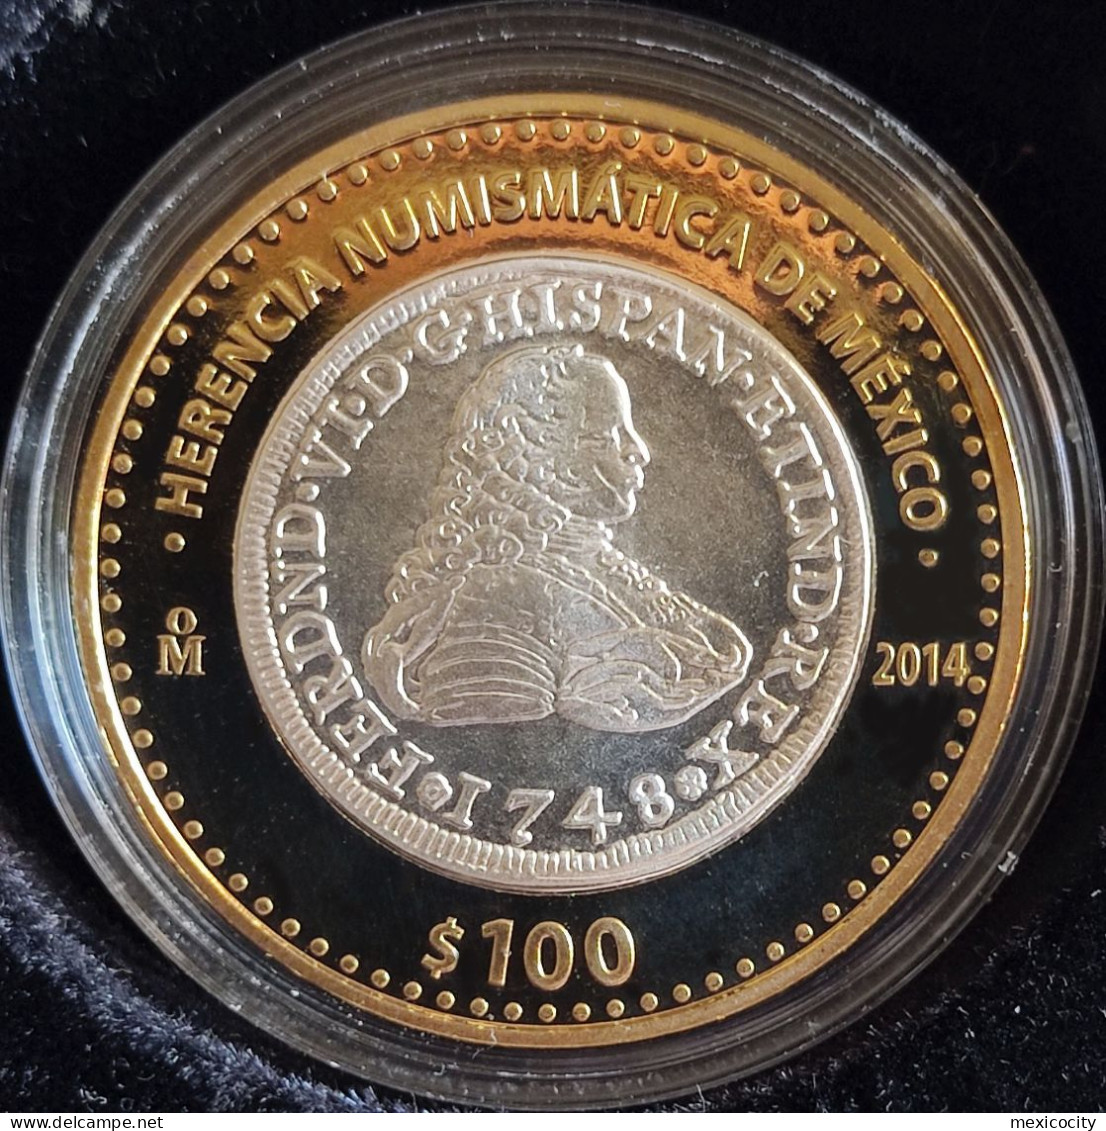 MEXICO 2014 $100 "8 Escudos Fernando VI Coin" Design SILVER Core Num. Heritage Series Proof Edition - Mexico